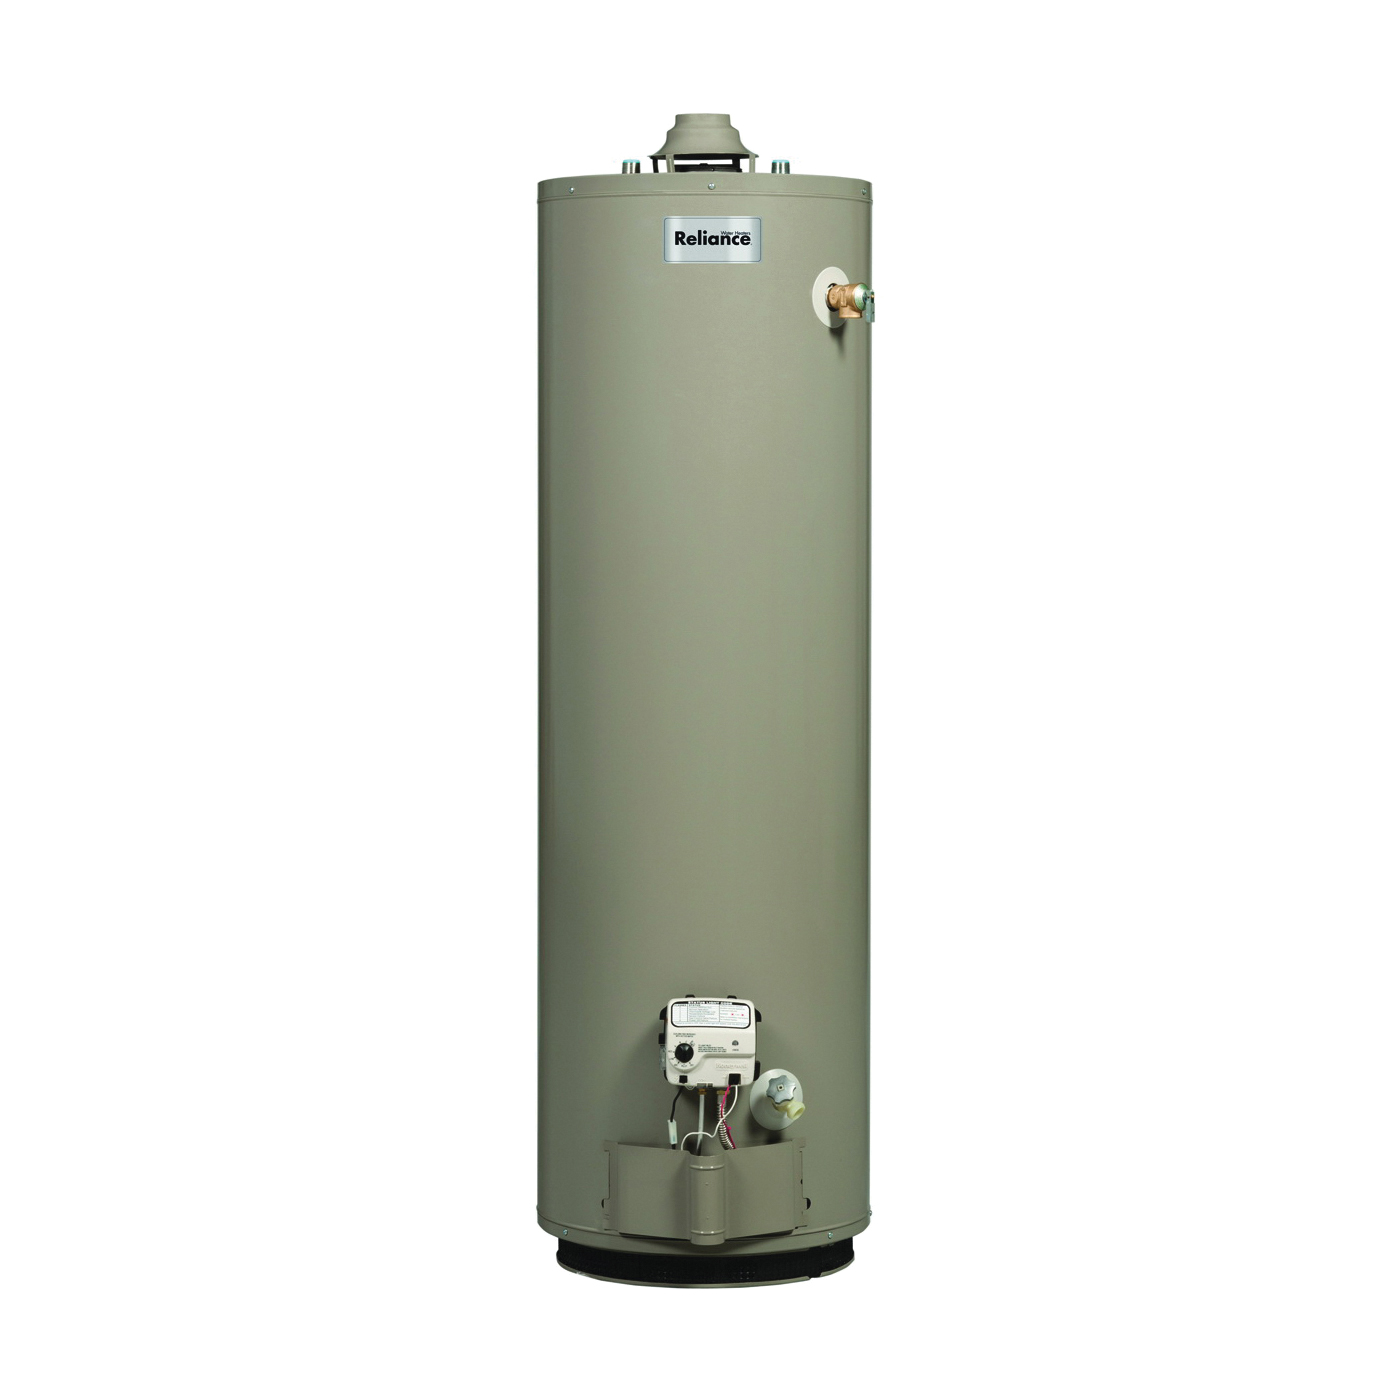 Reliance 6 30 NOCT Gas Water Heater, Natural Gas, 30 gal Tank, 69 gph, 35500 Btu BTU, 0.6 Energy Efficiency